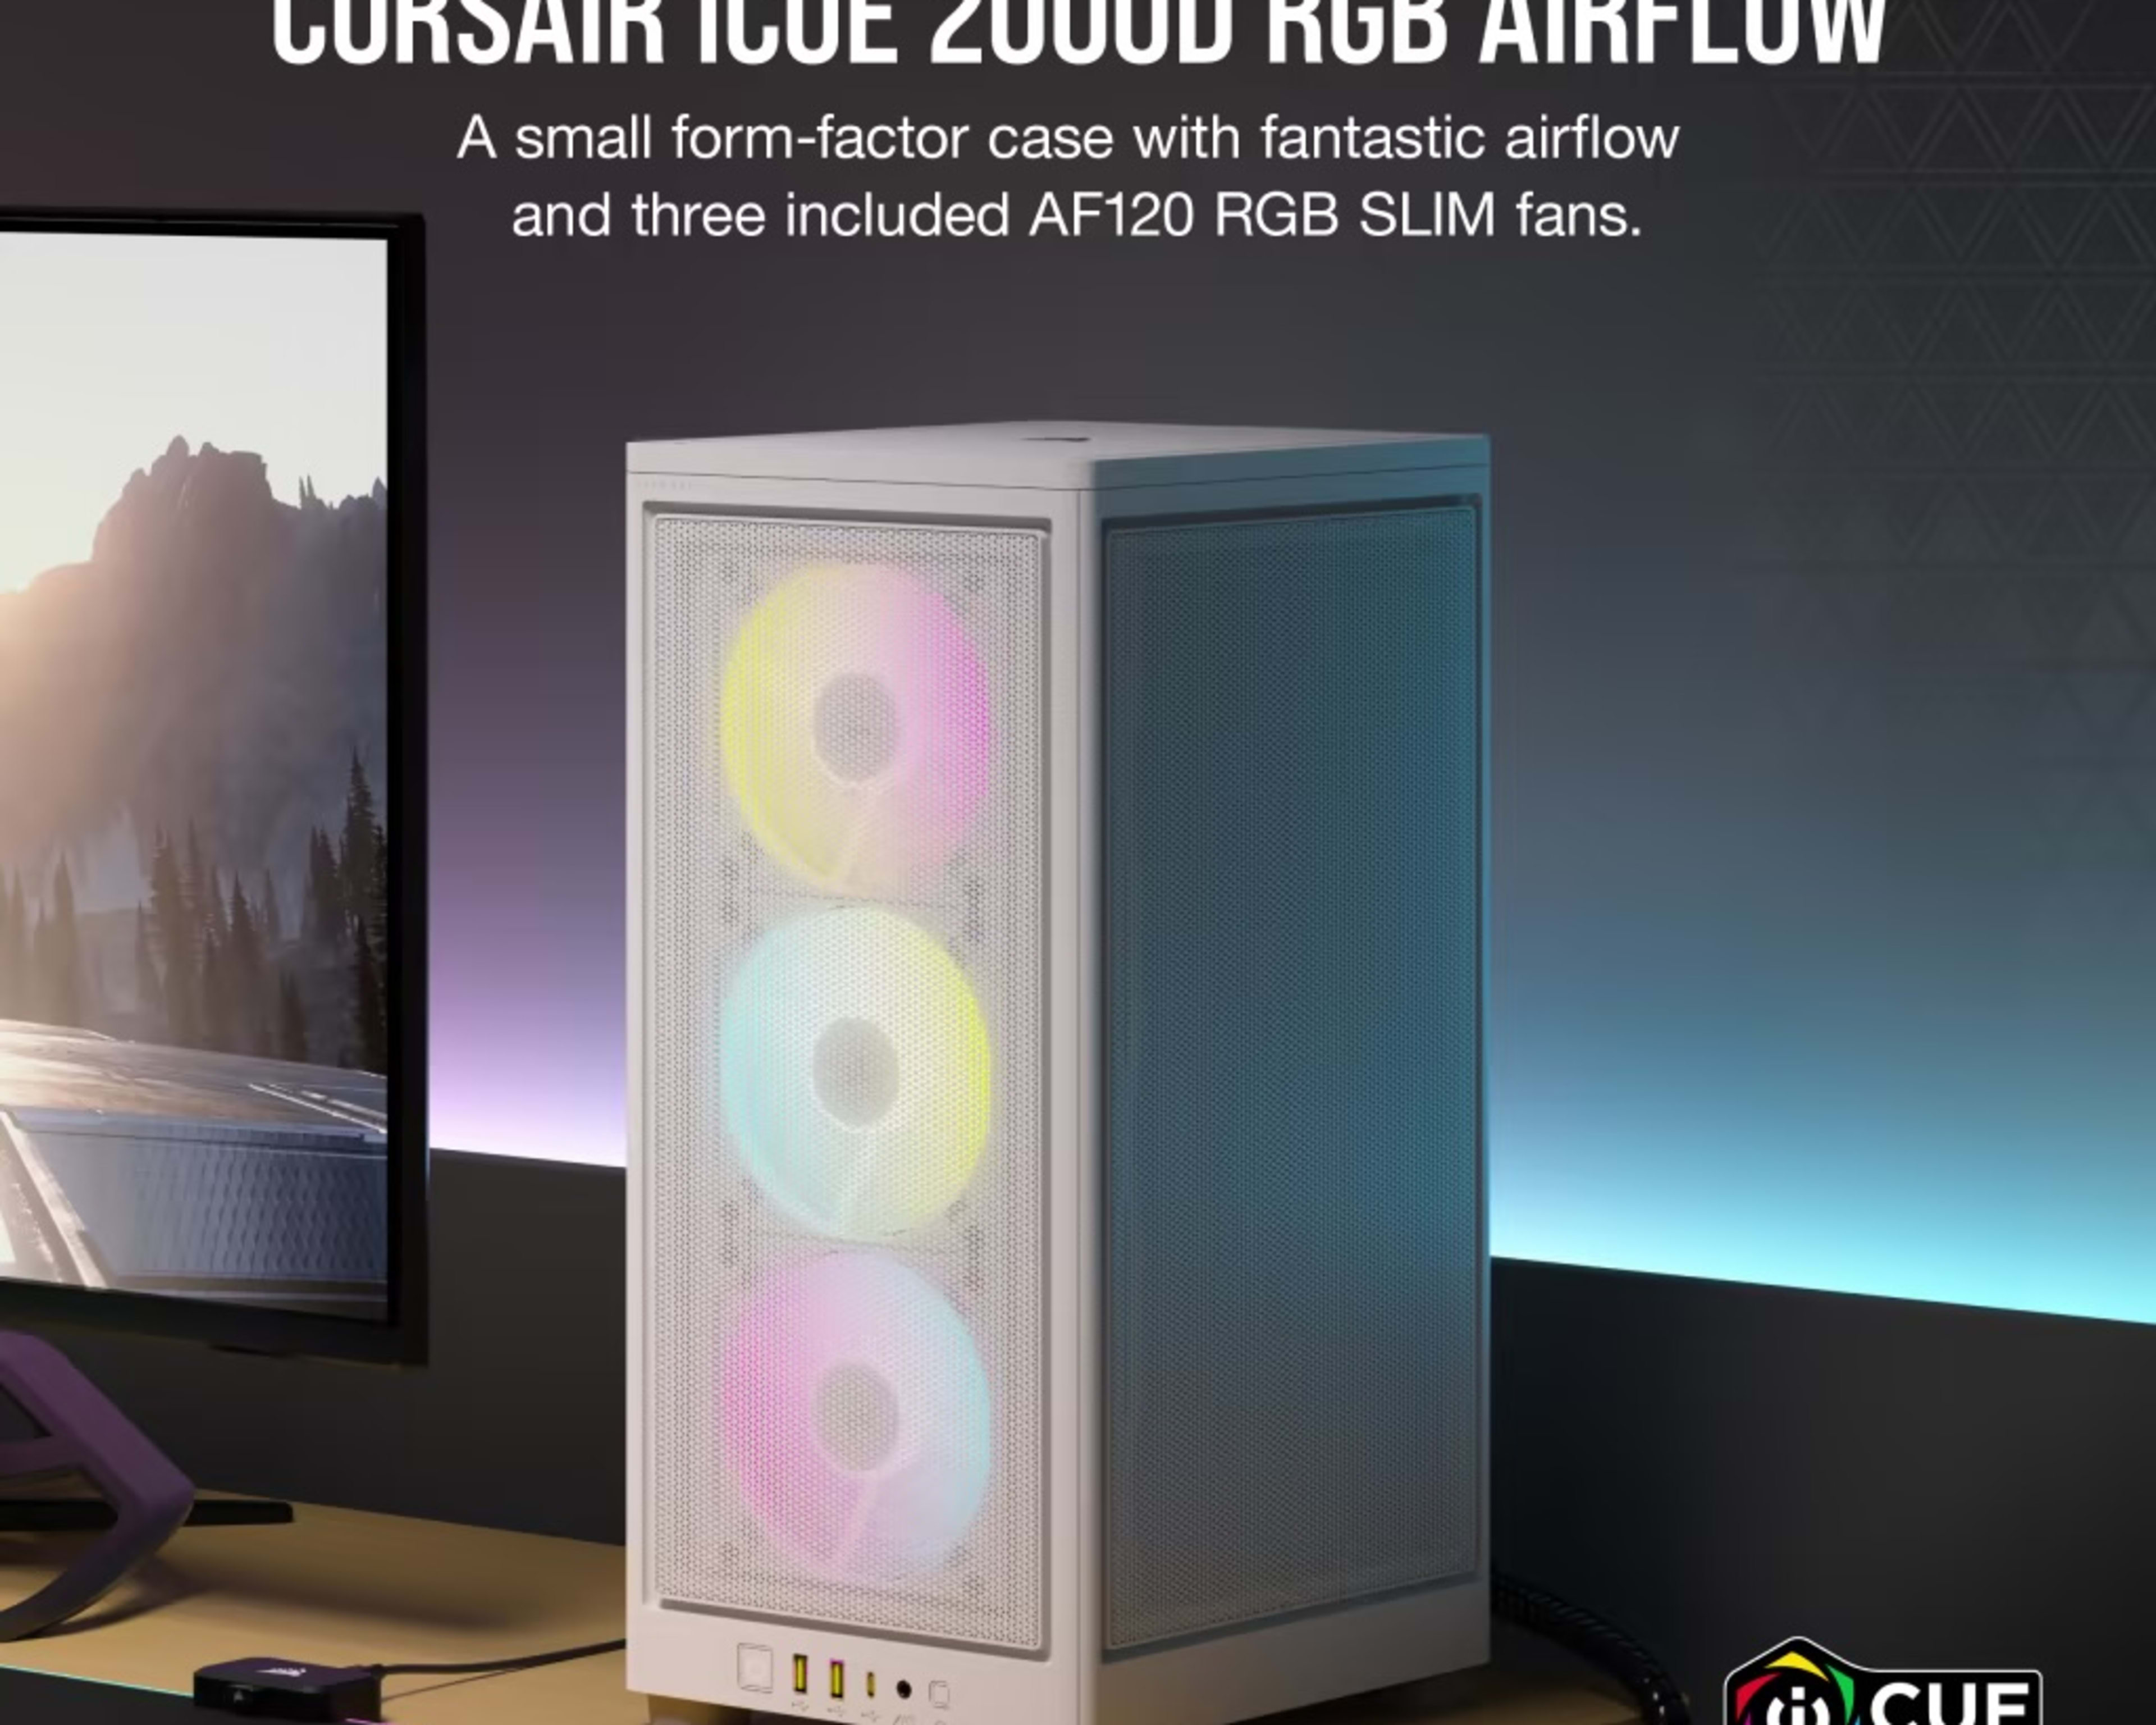 2000D RGB AIRFLOW Mini-ITX PC Case - White